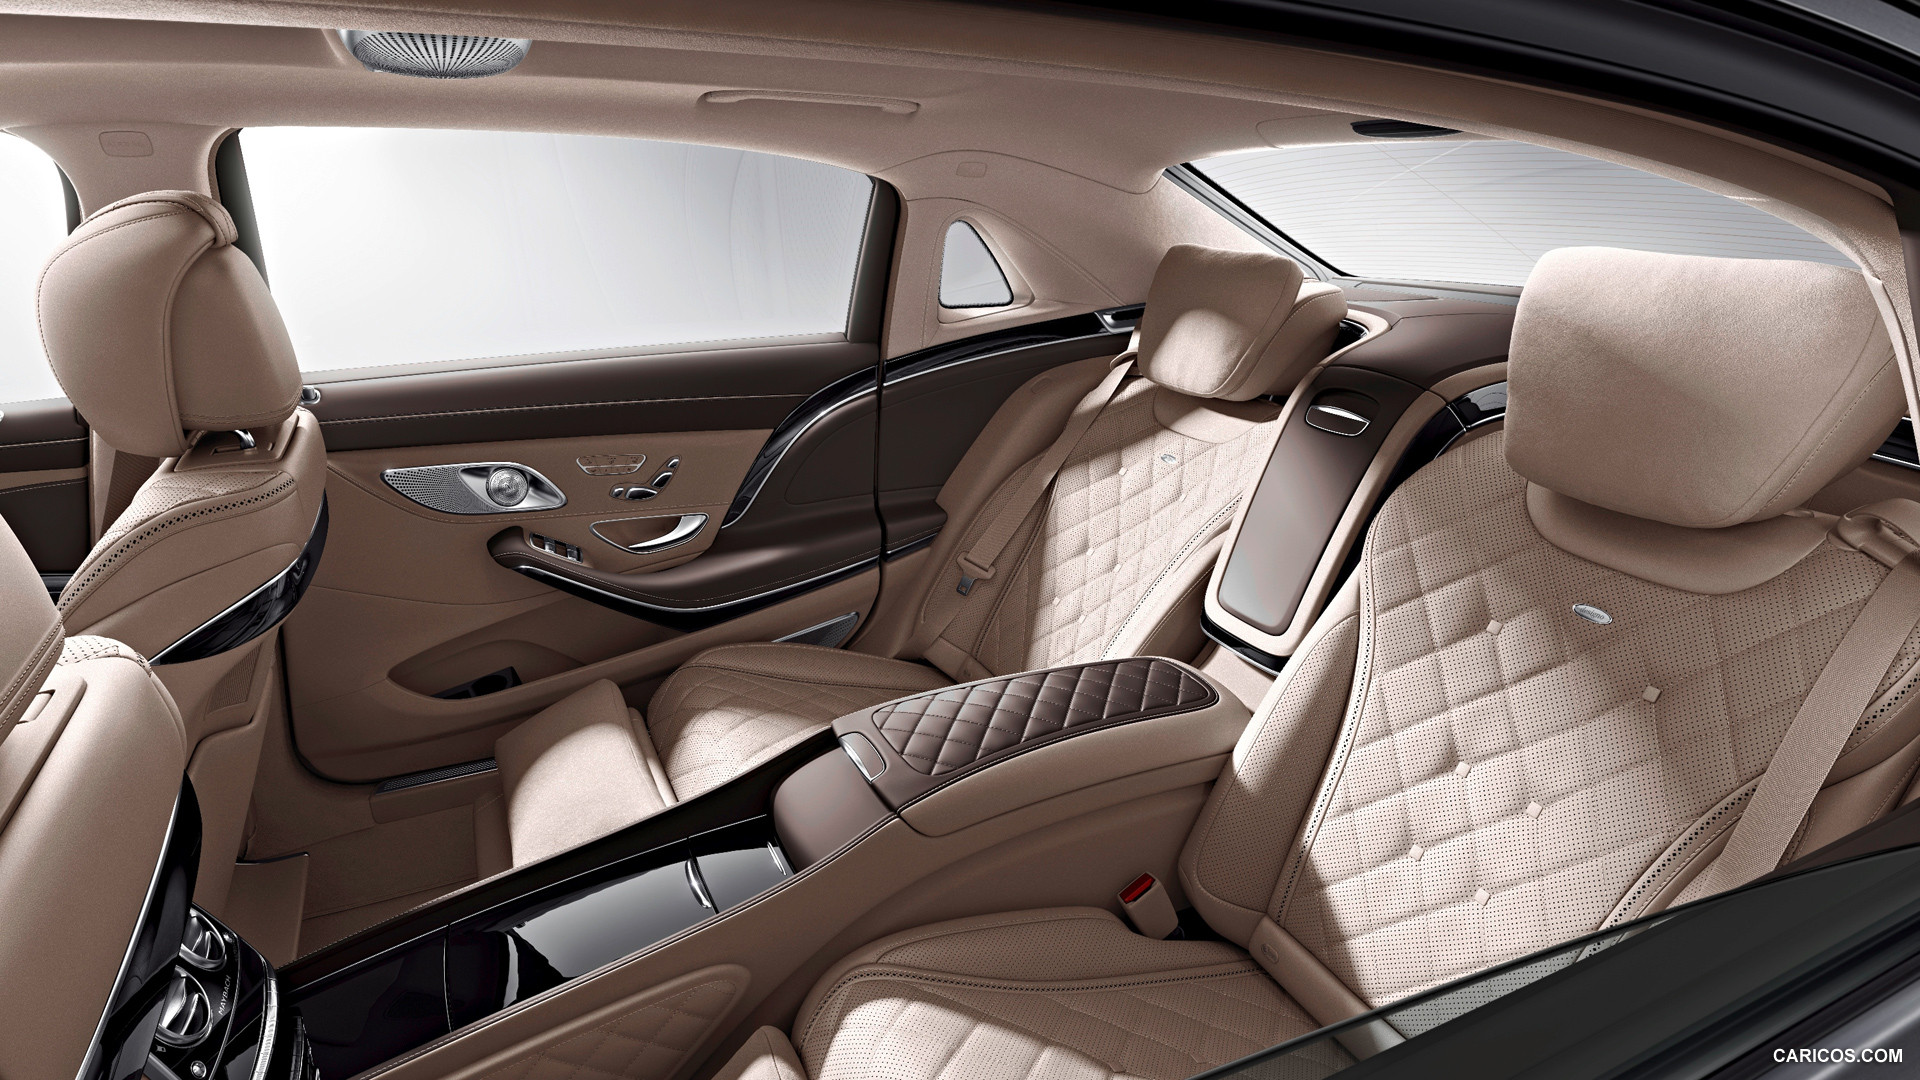 2016 Mercedes Maybach S Class S600 Interior Rear Seats